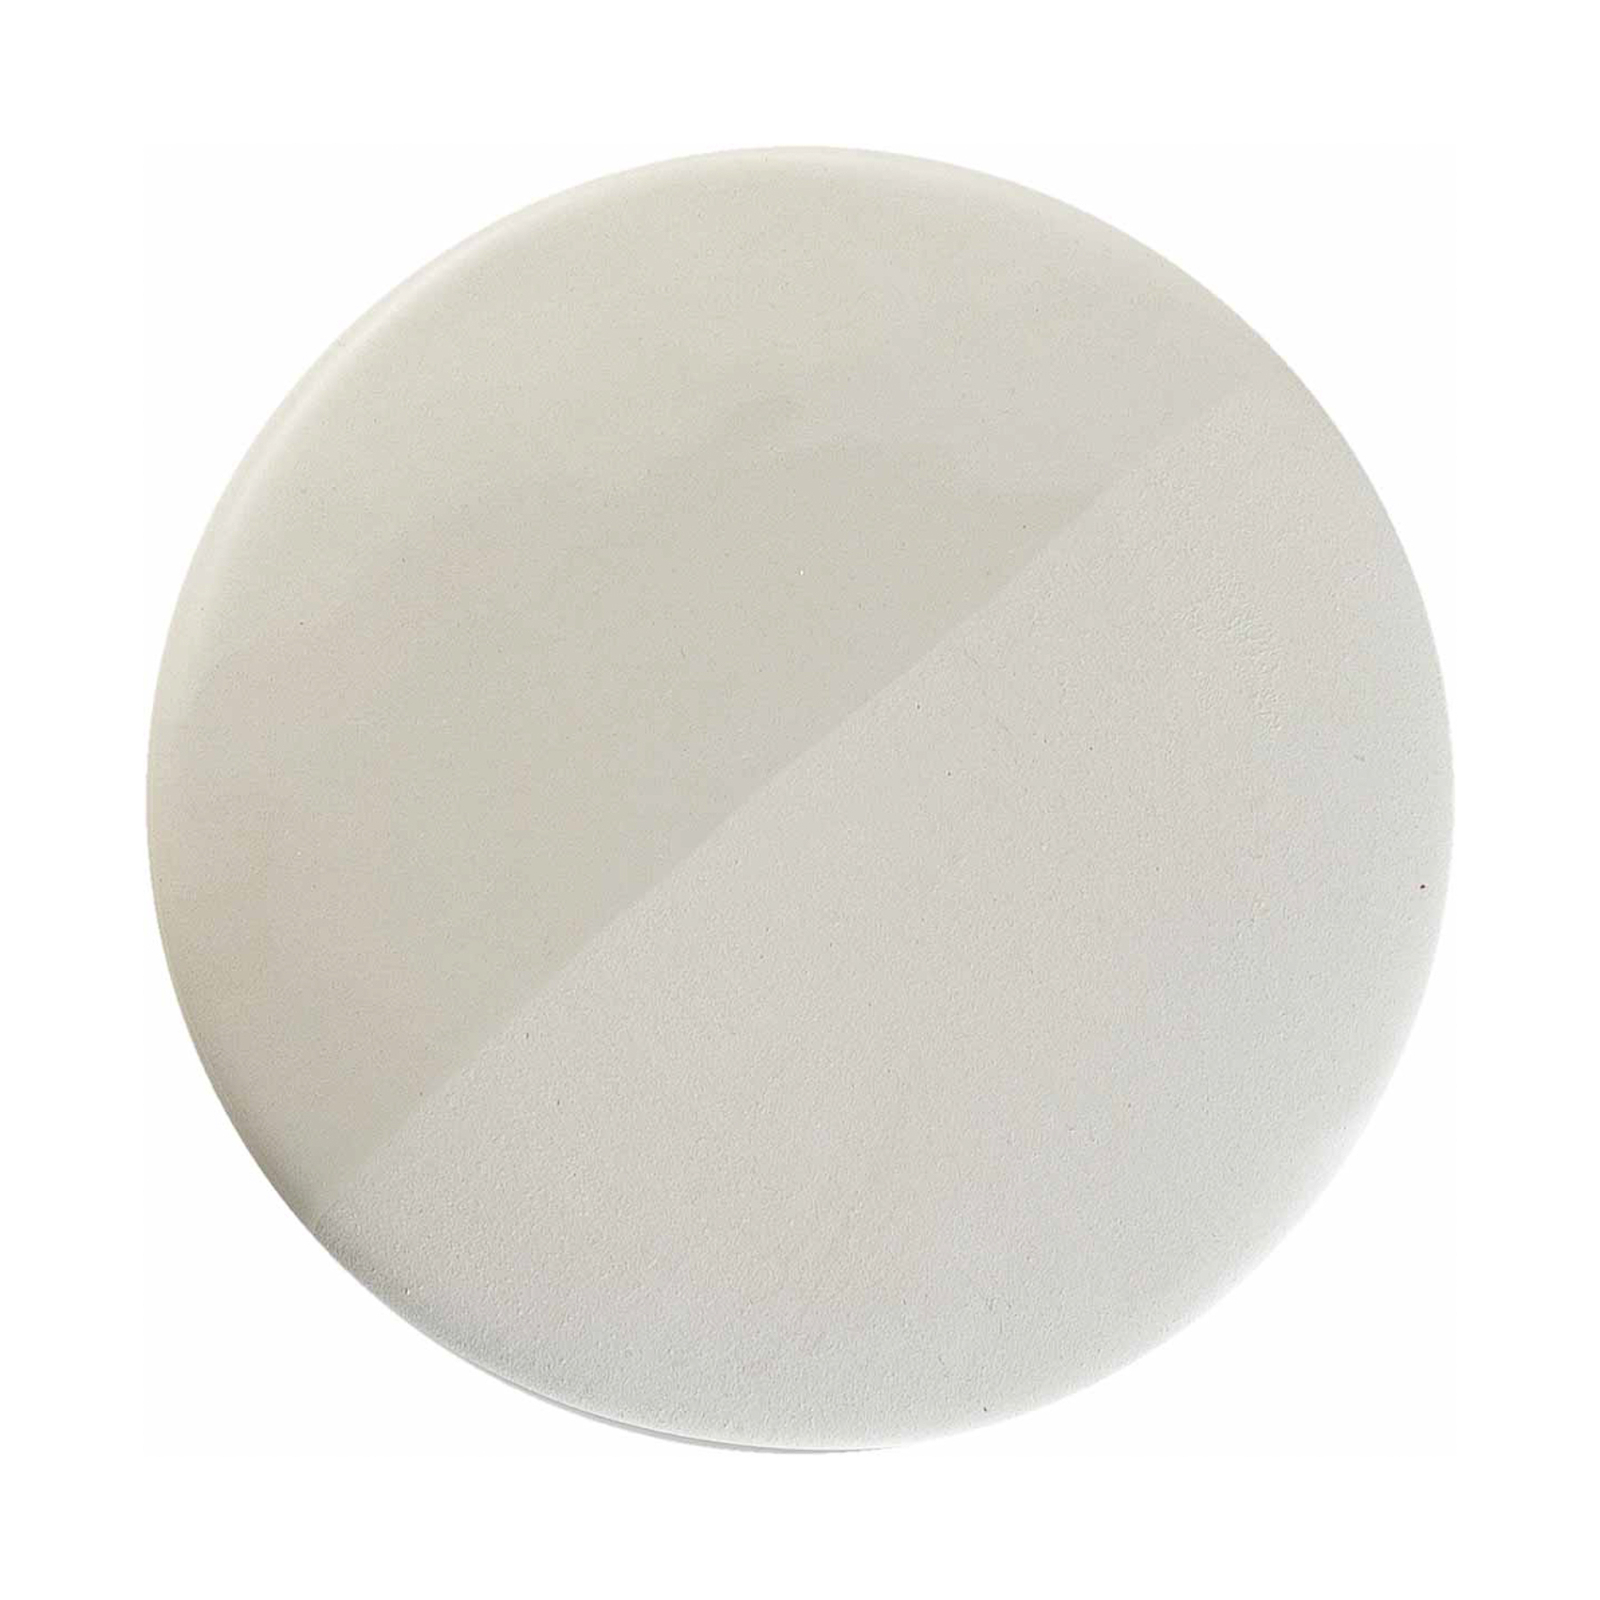 Caxixi pendant light made of ceramic, white